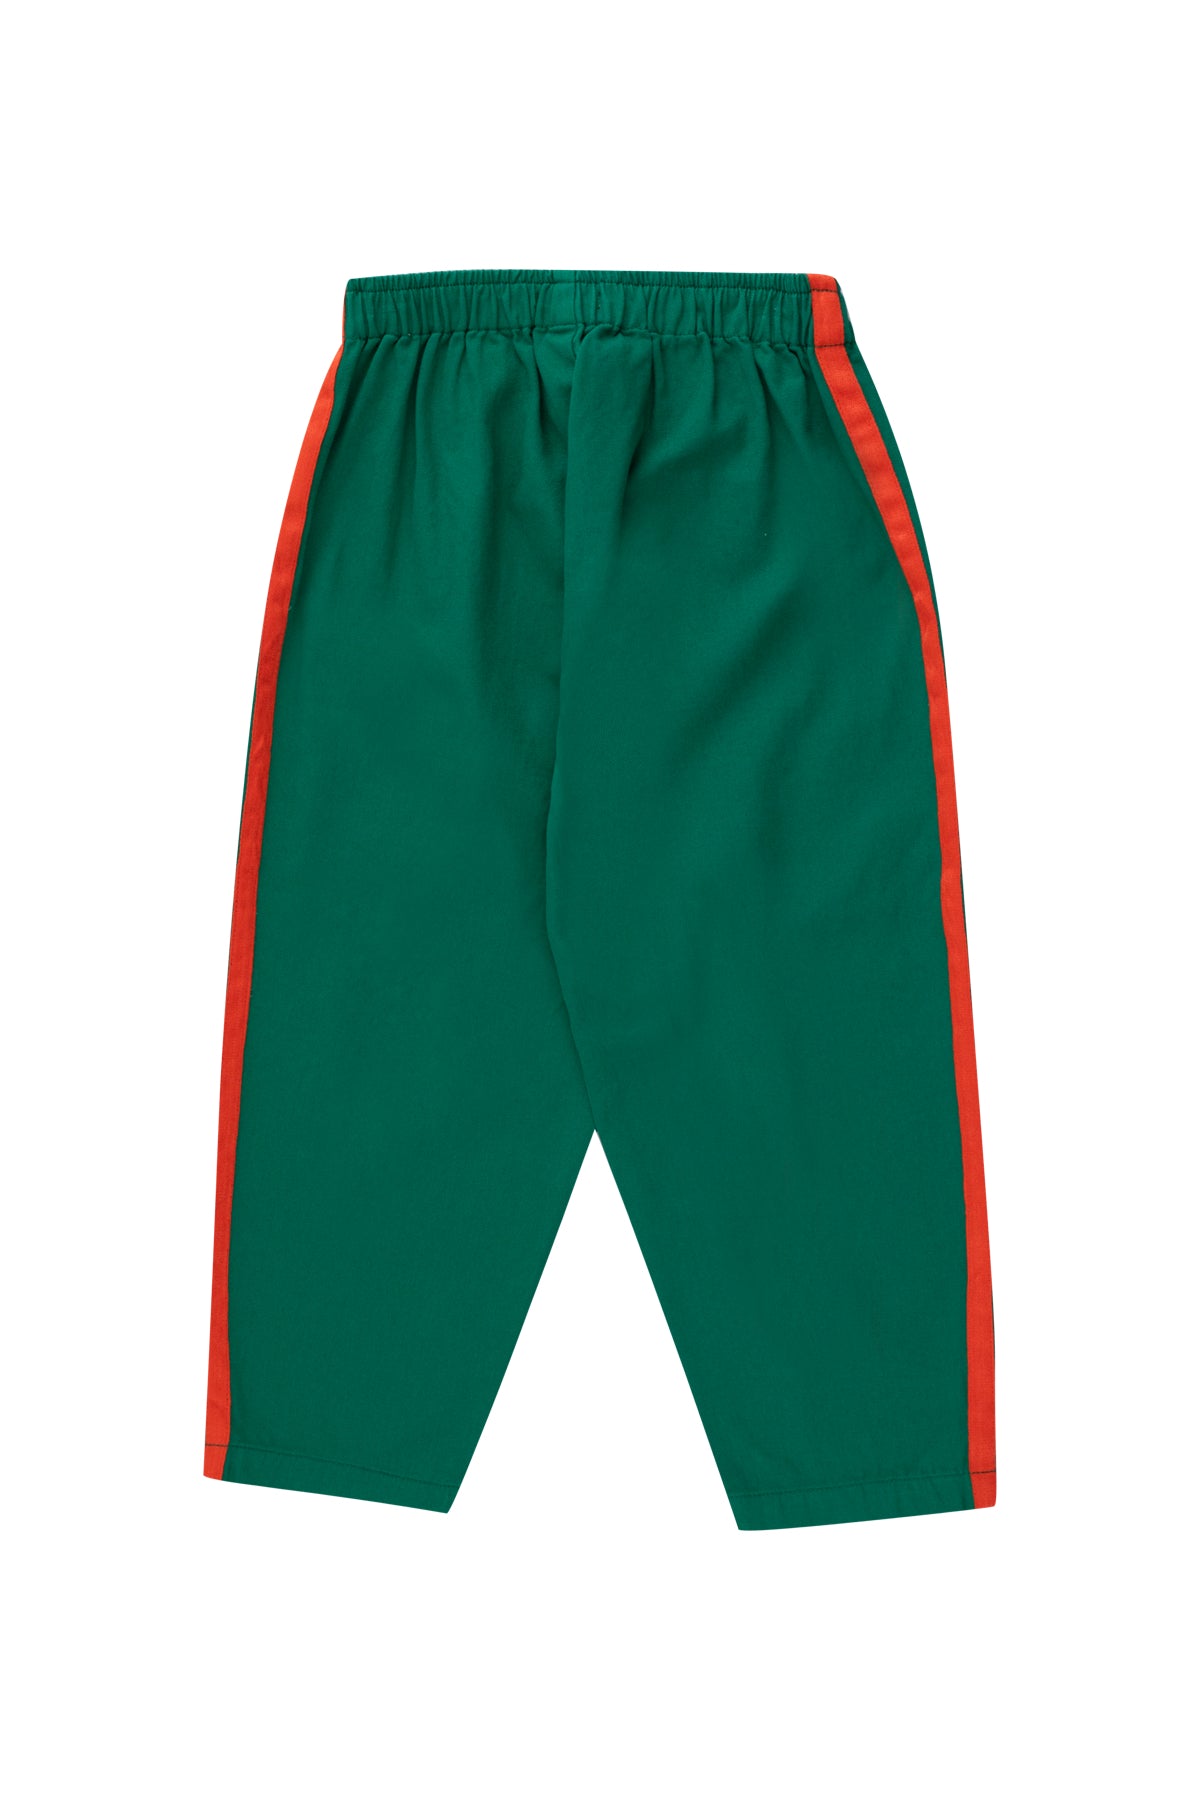 Tiny Cottons - barrel pants - deep green